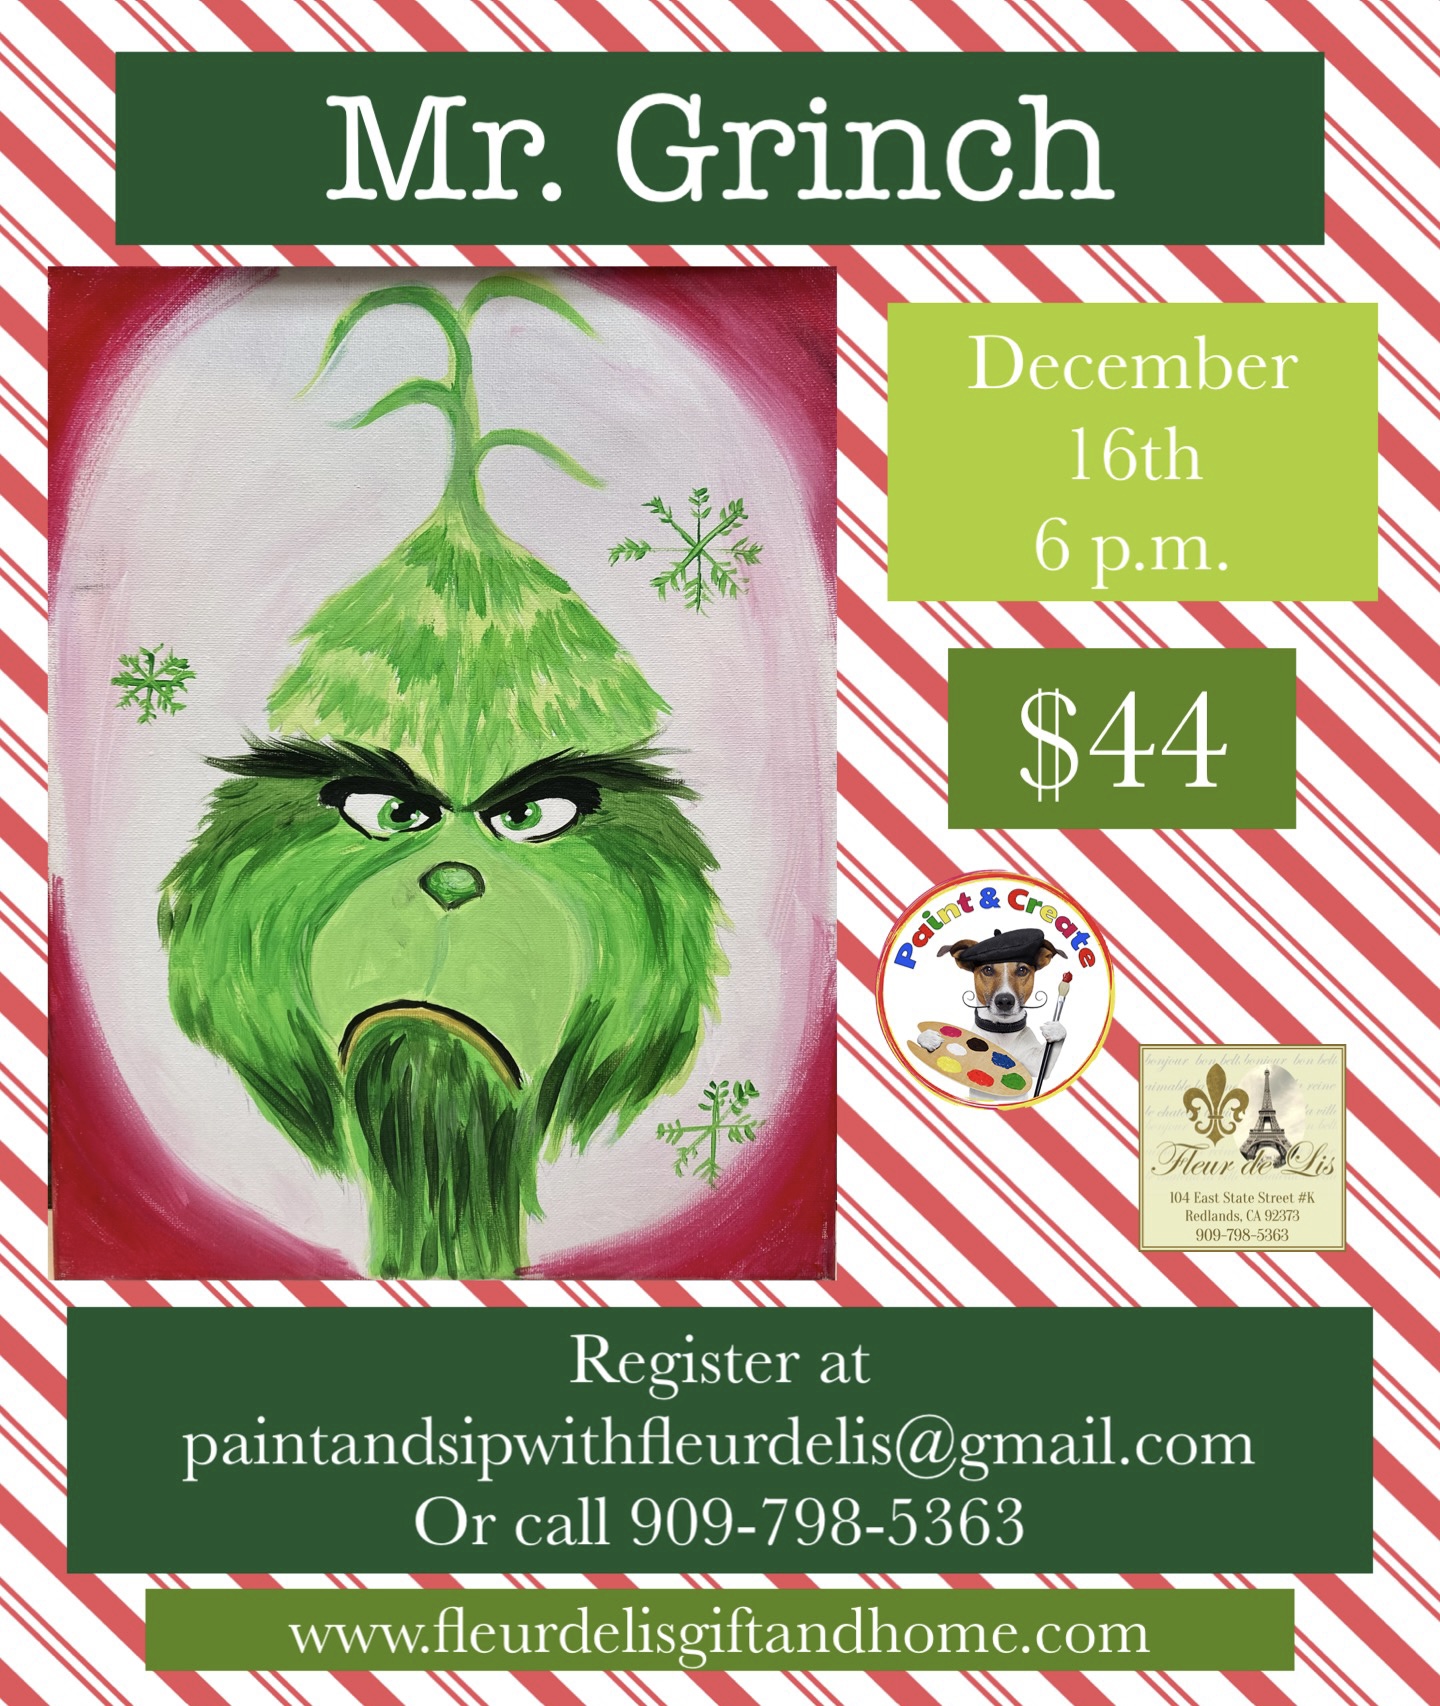 December 16th 6 p.m. Mr. Grinch